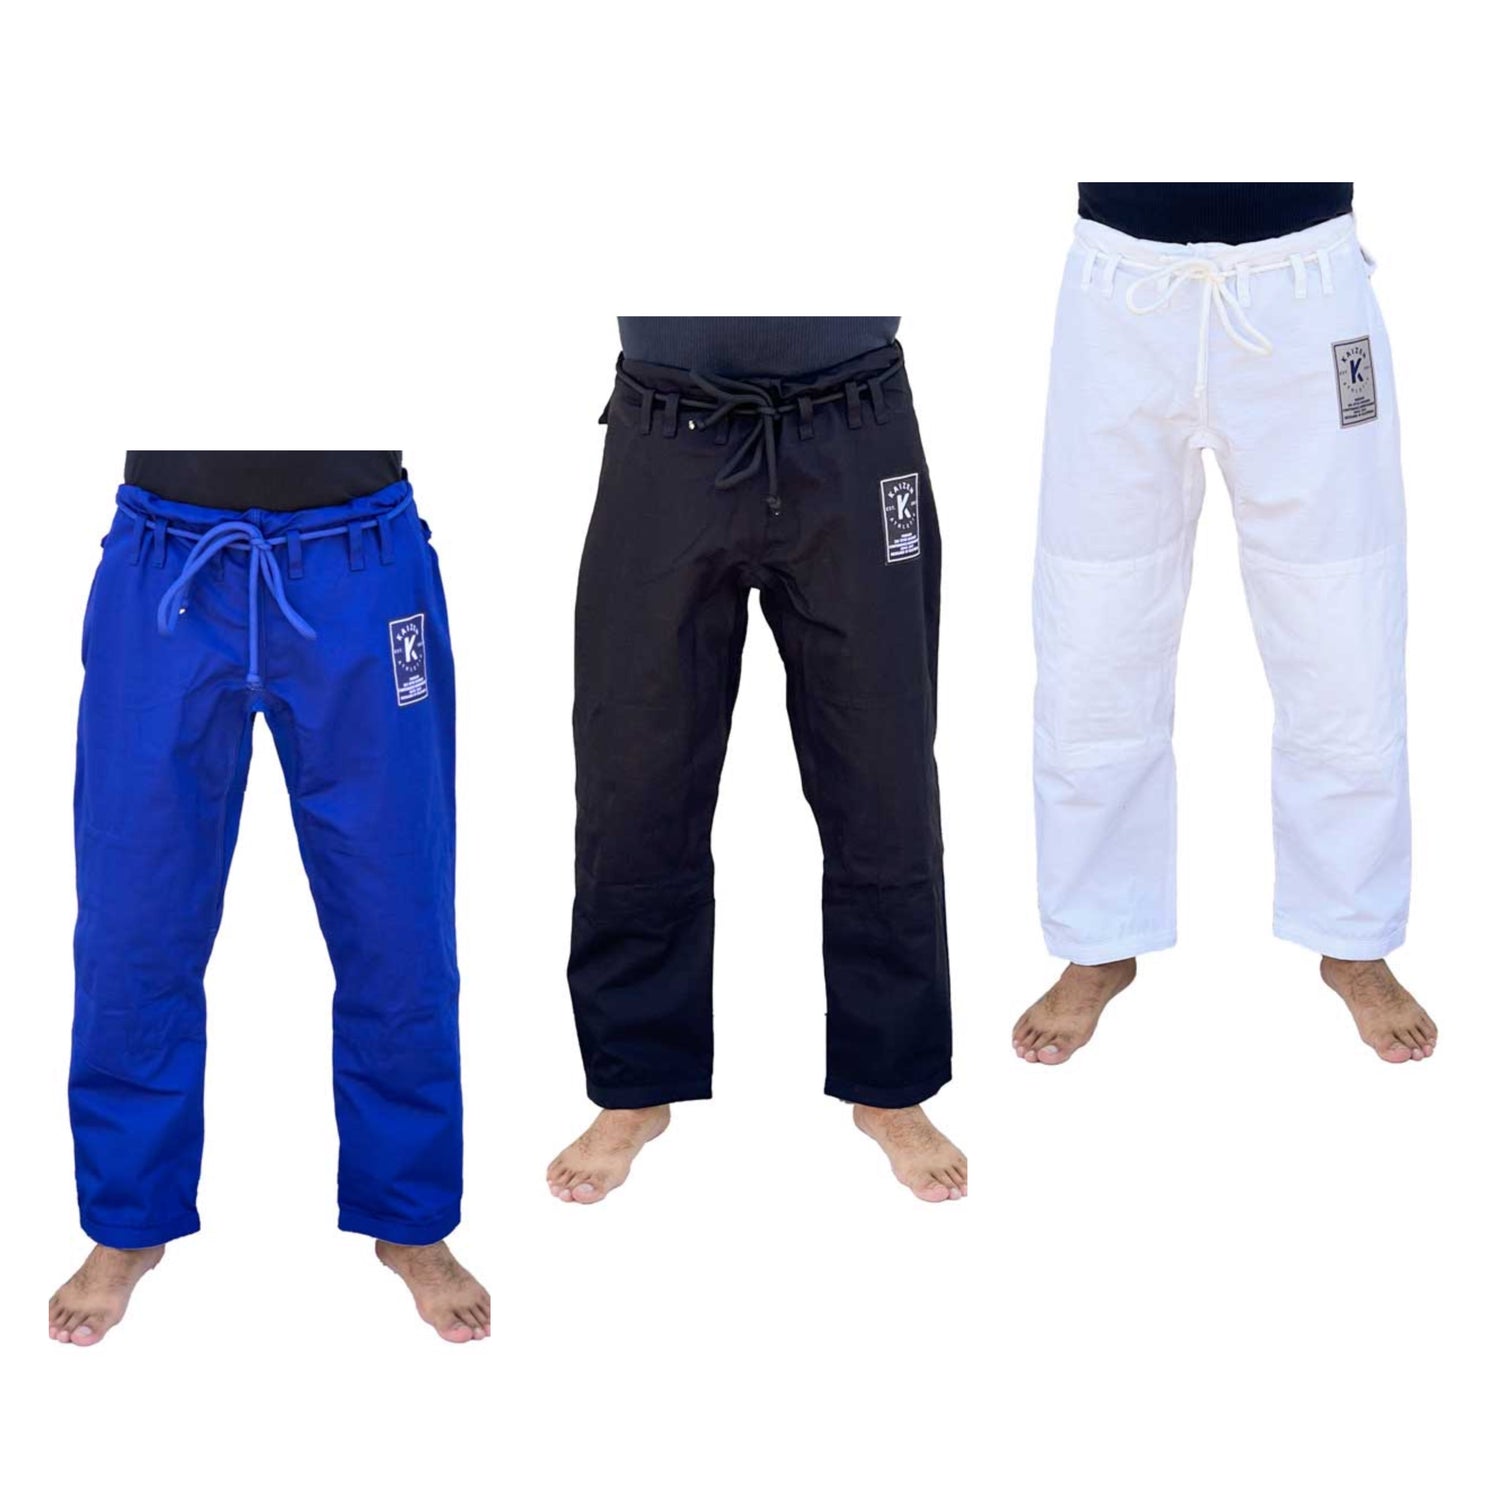 Pantalones BJJ Gi de Kaizen Athletic (Blanco, Azul, Negro)